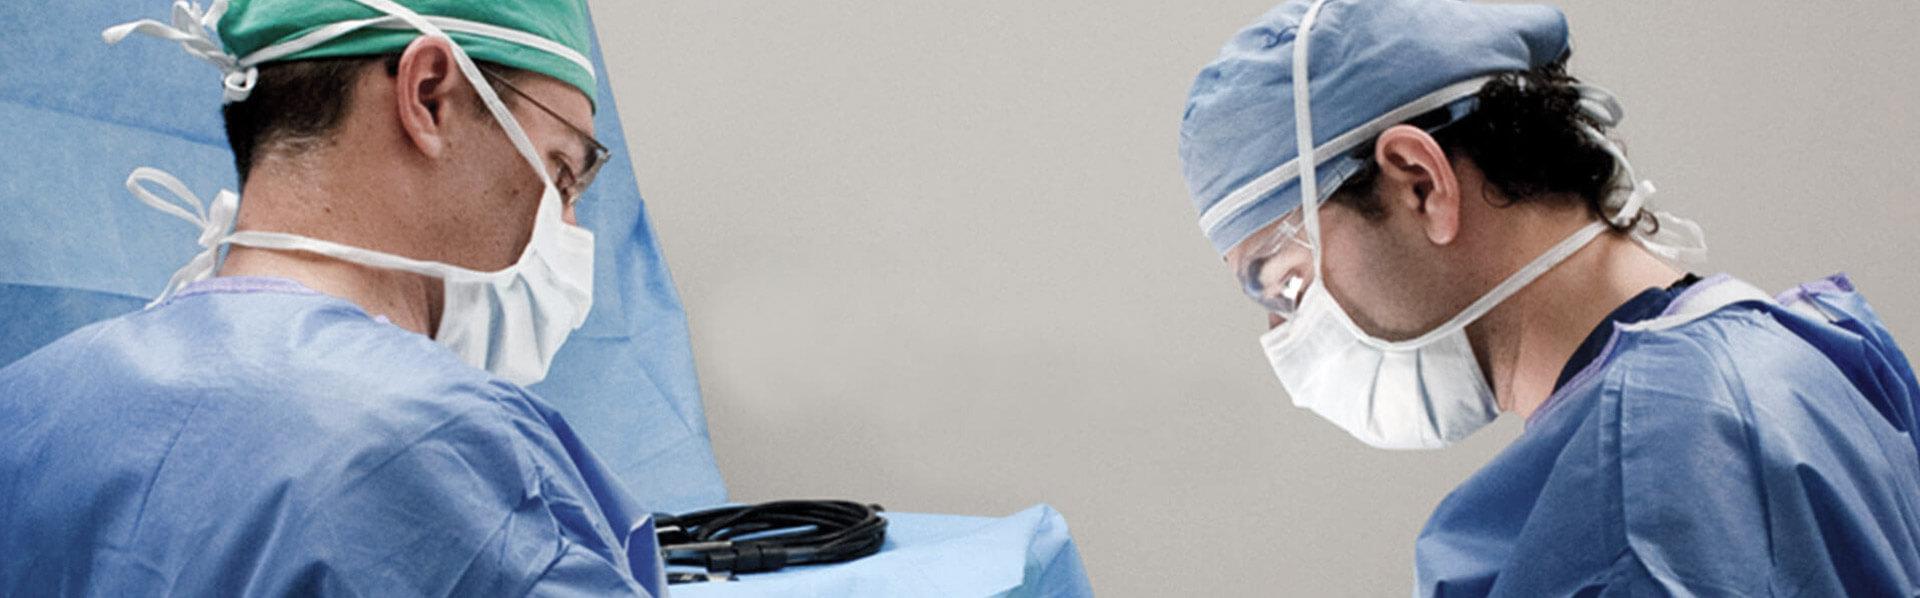 Services chirurgiens Clinique podiatrique de Repentigny